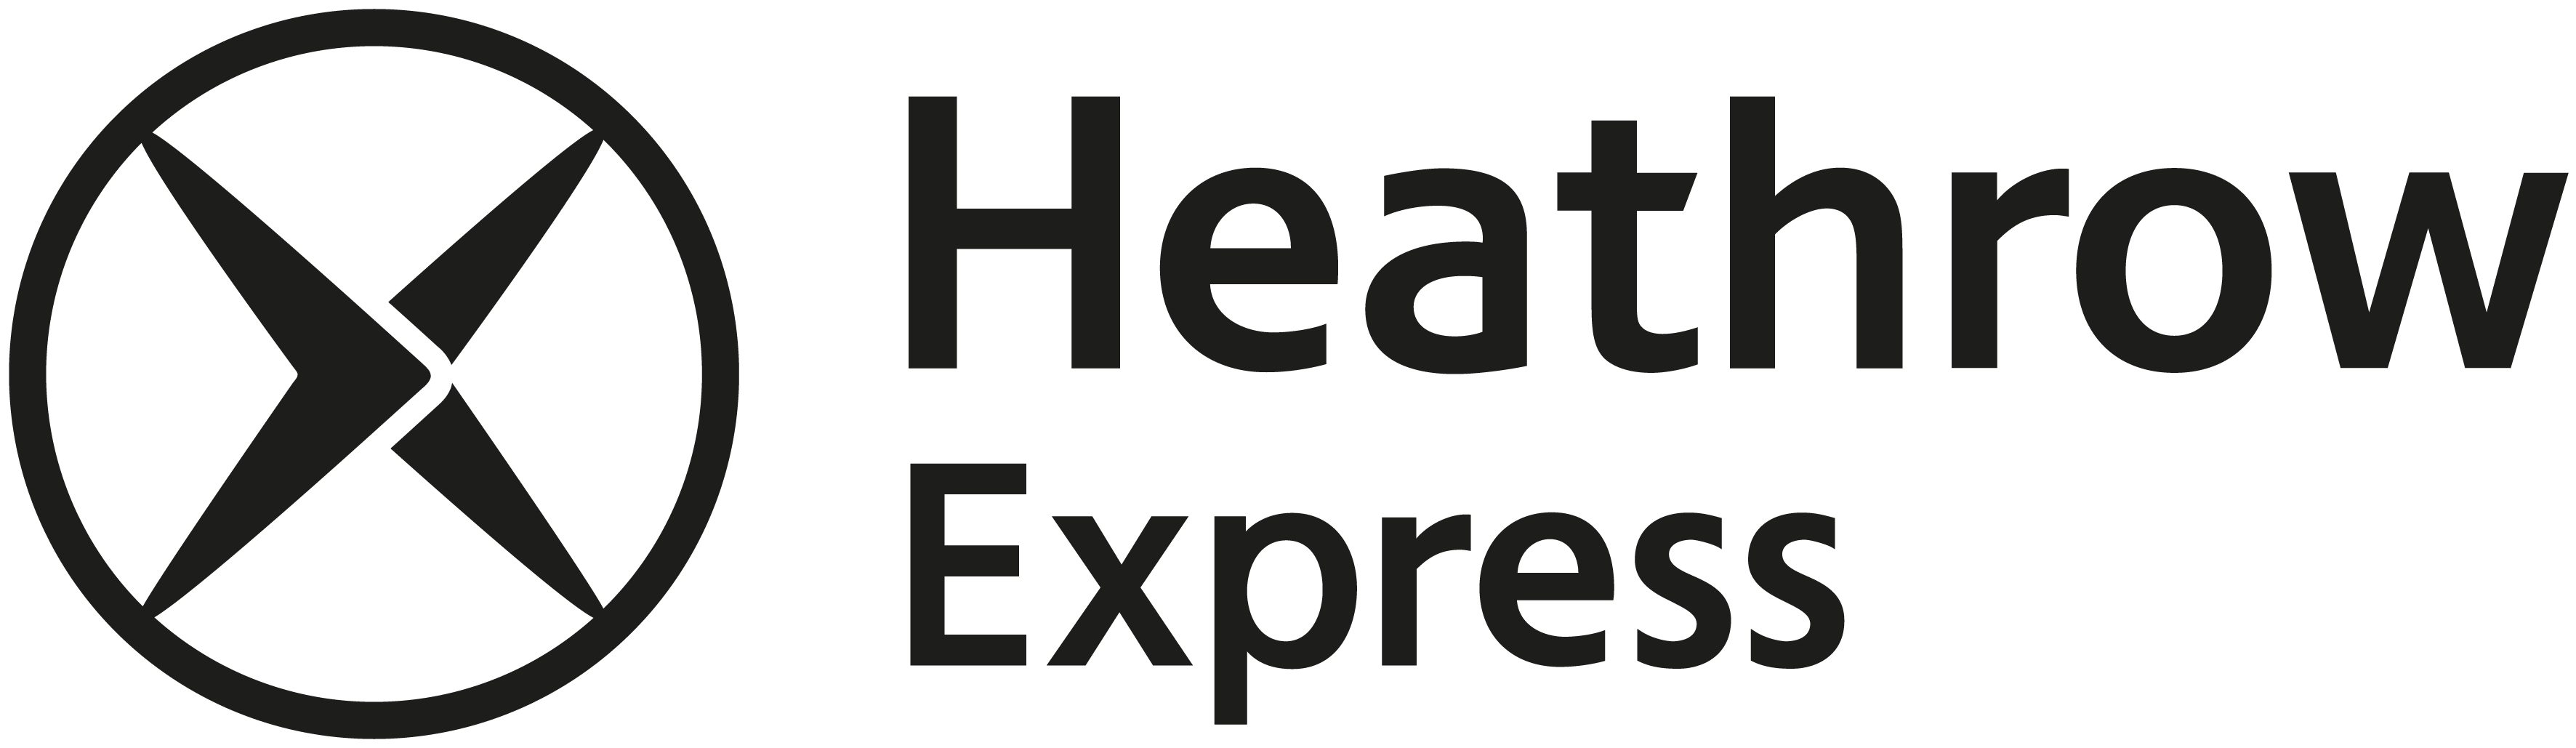 Heathrow Express Coupons & Promo Codes